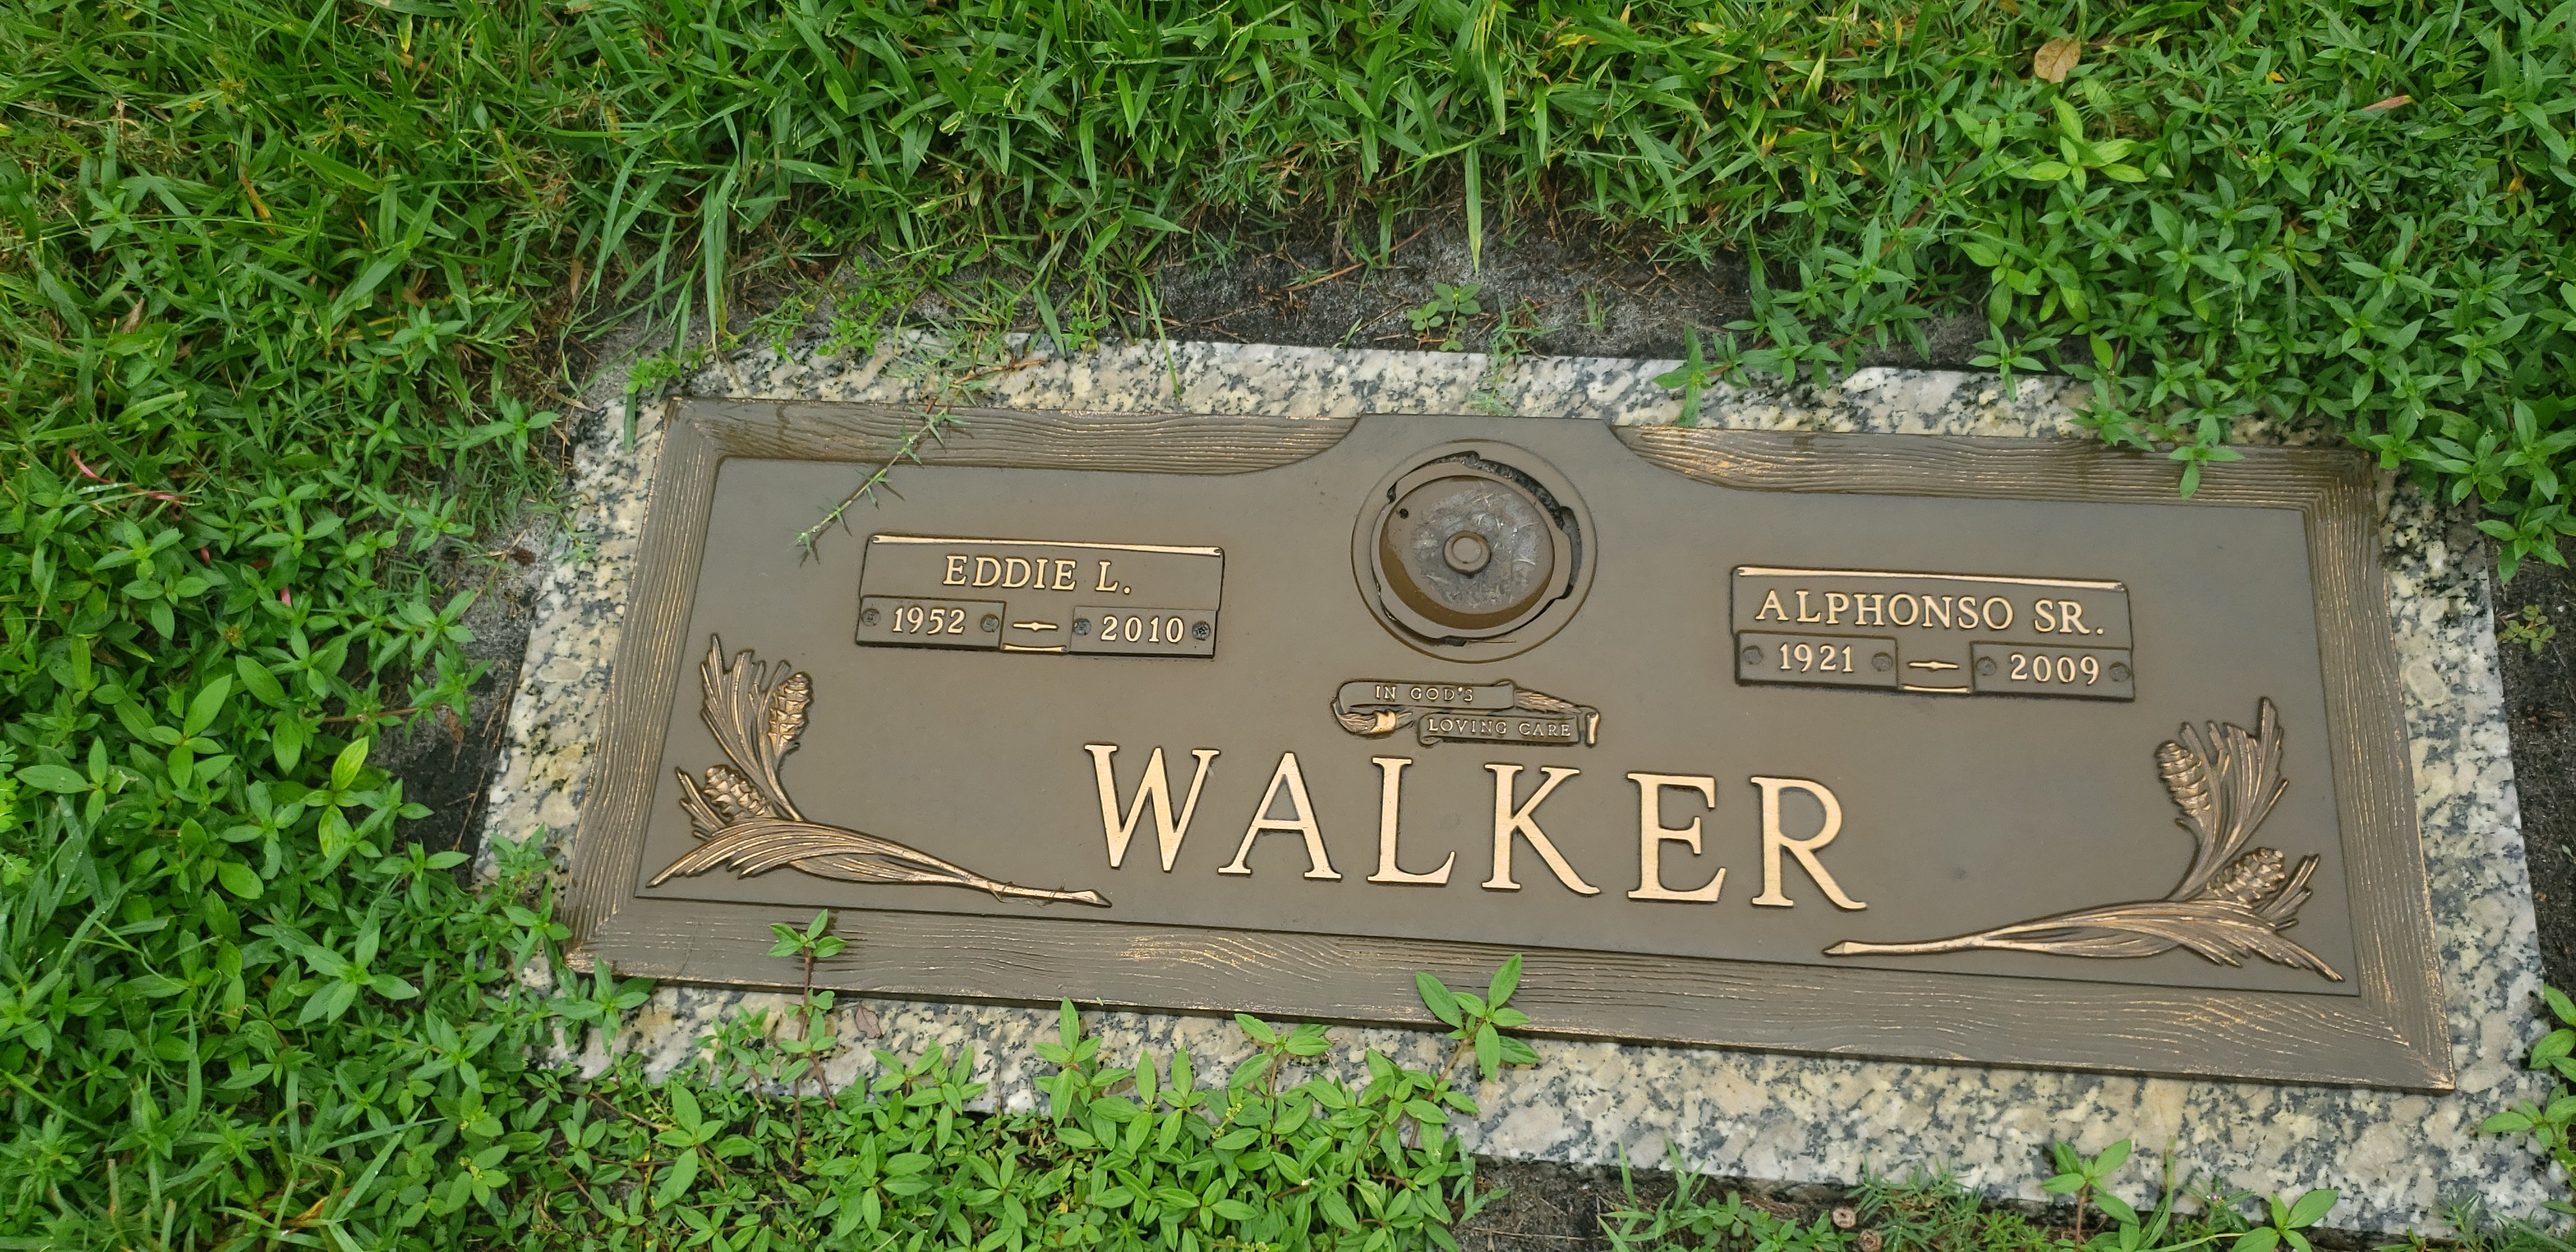 Alphonso Walker, Sr